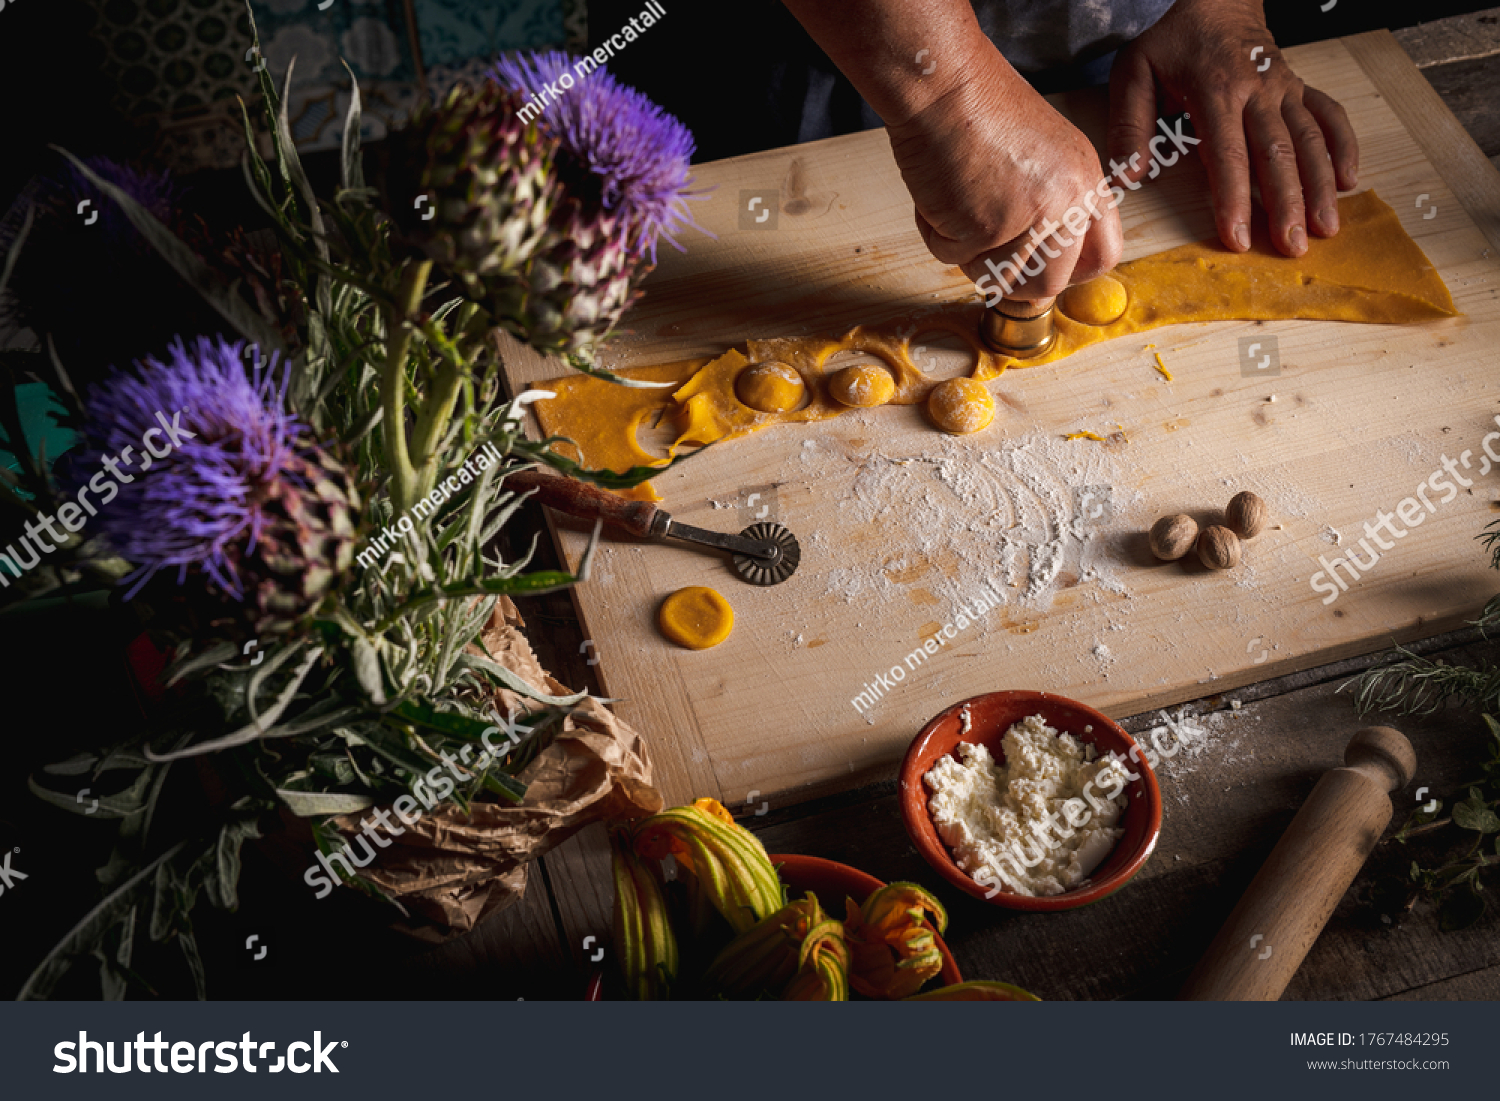 https://lnx.mirkone.it/wp-content/uploads/2016/01/stock-photo-homemade-pasta-making-process-the-chef-makes-traditional-italian-fresh-pasta-by-hand-1767484295.jpg